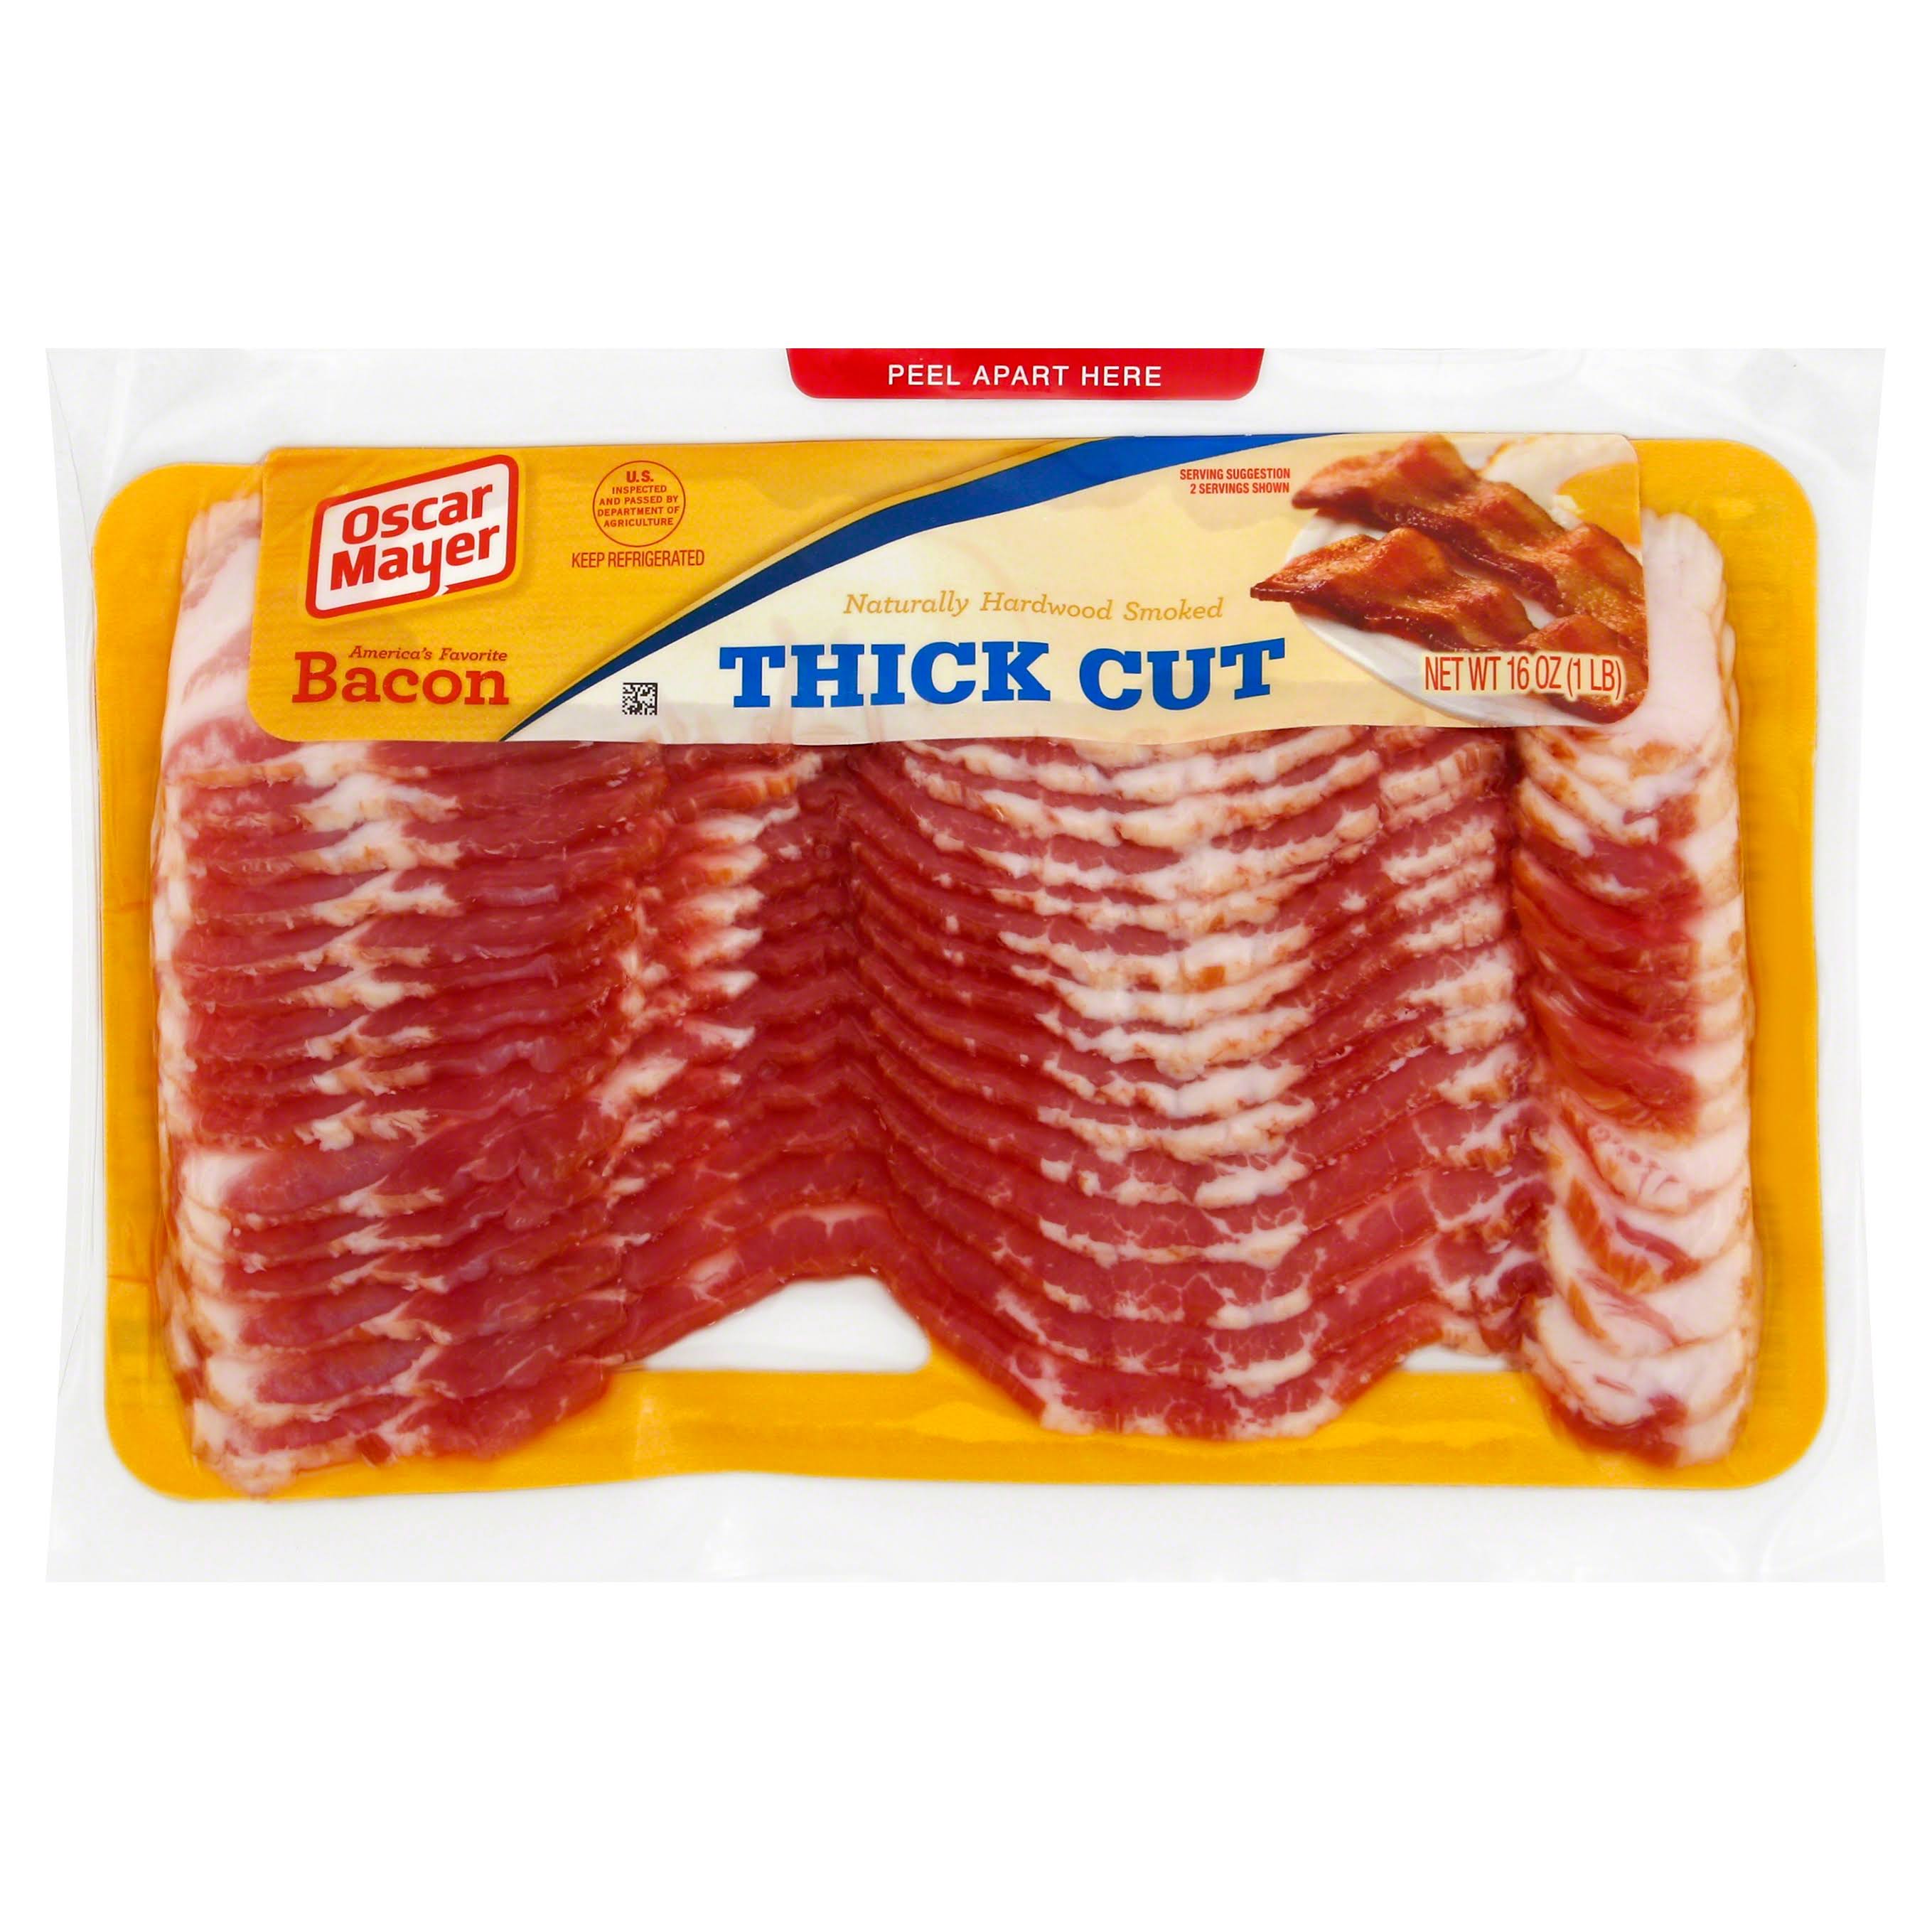 Oscar Mayer Naturally Hardwood Smoked Thick Cut Bacon - 16oz